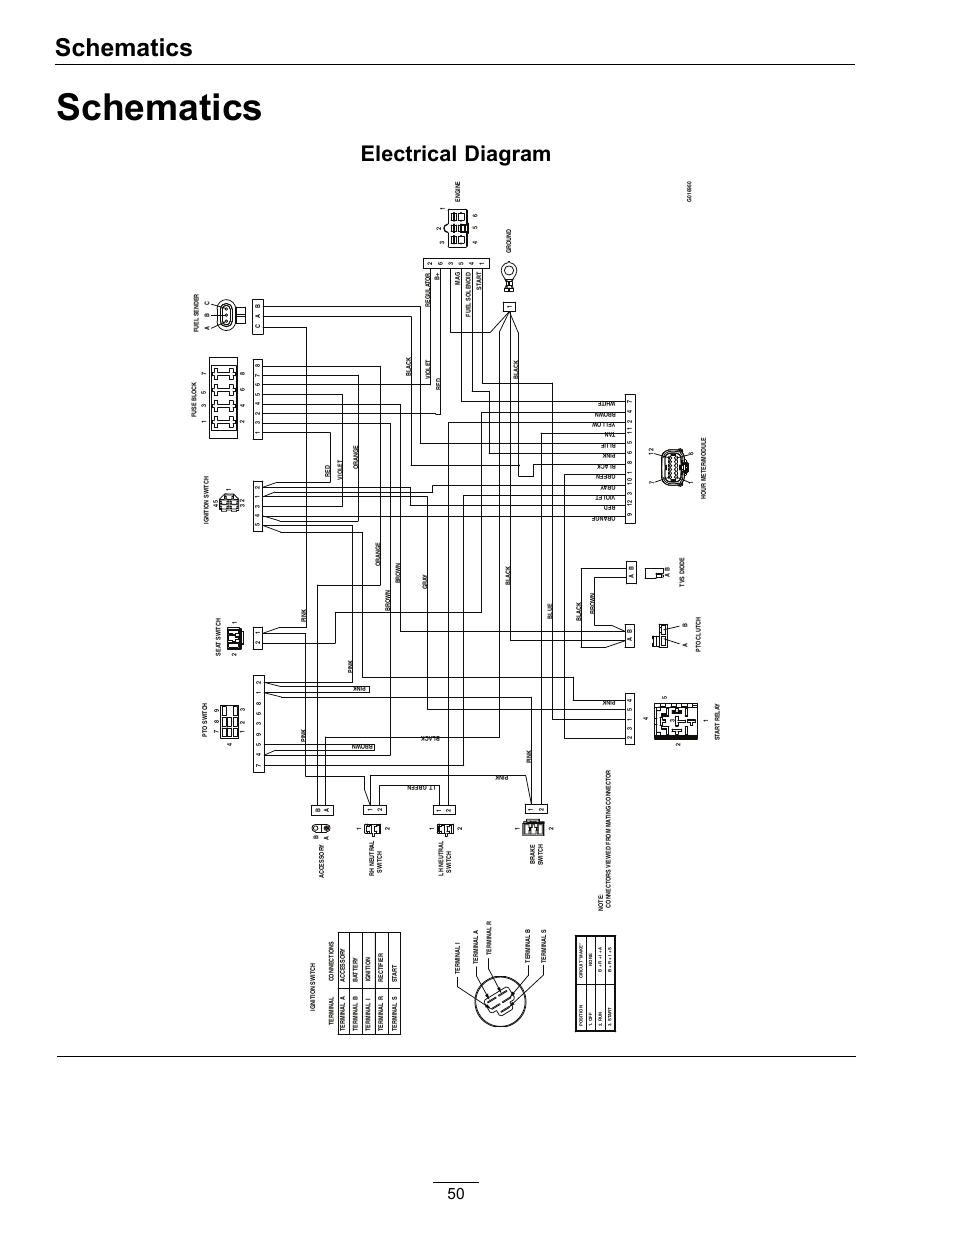 sony mex-6100 wiring diagram